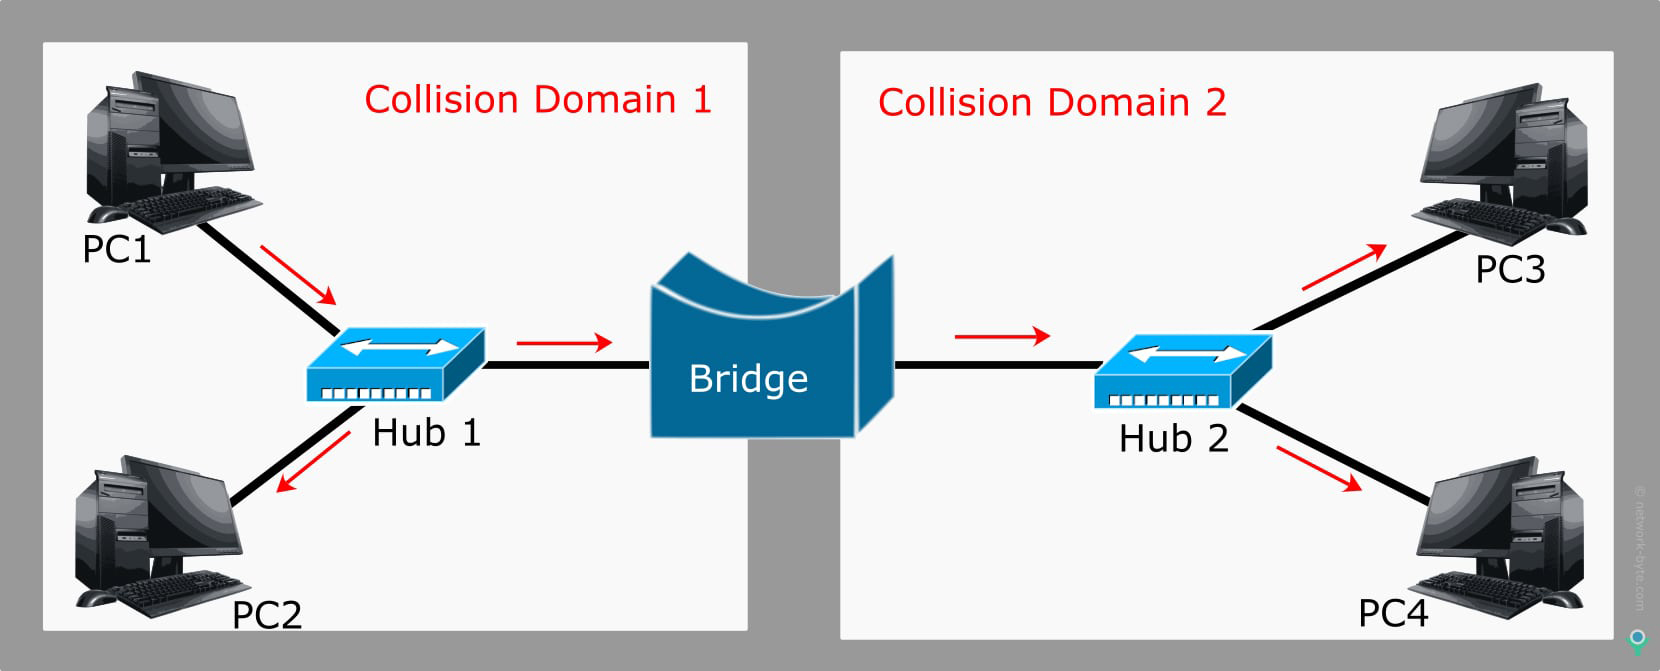 Bridge Collision Domain